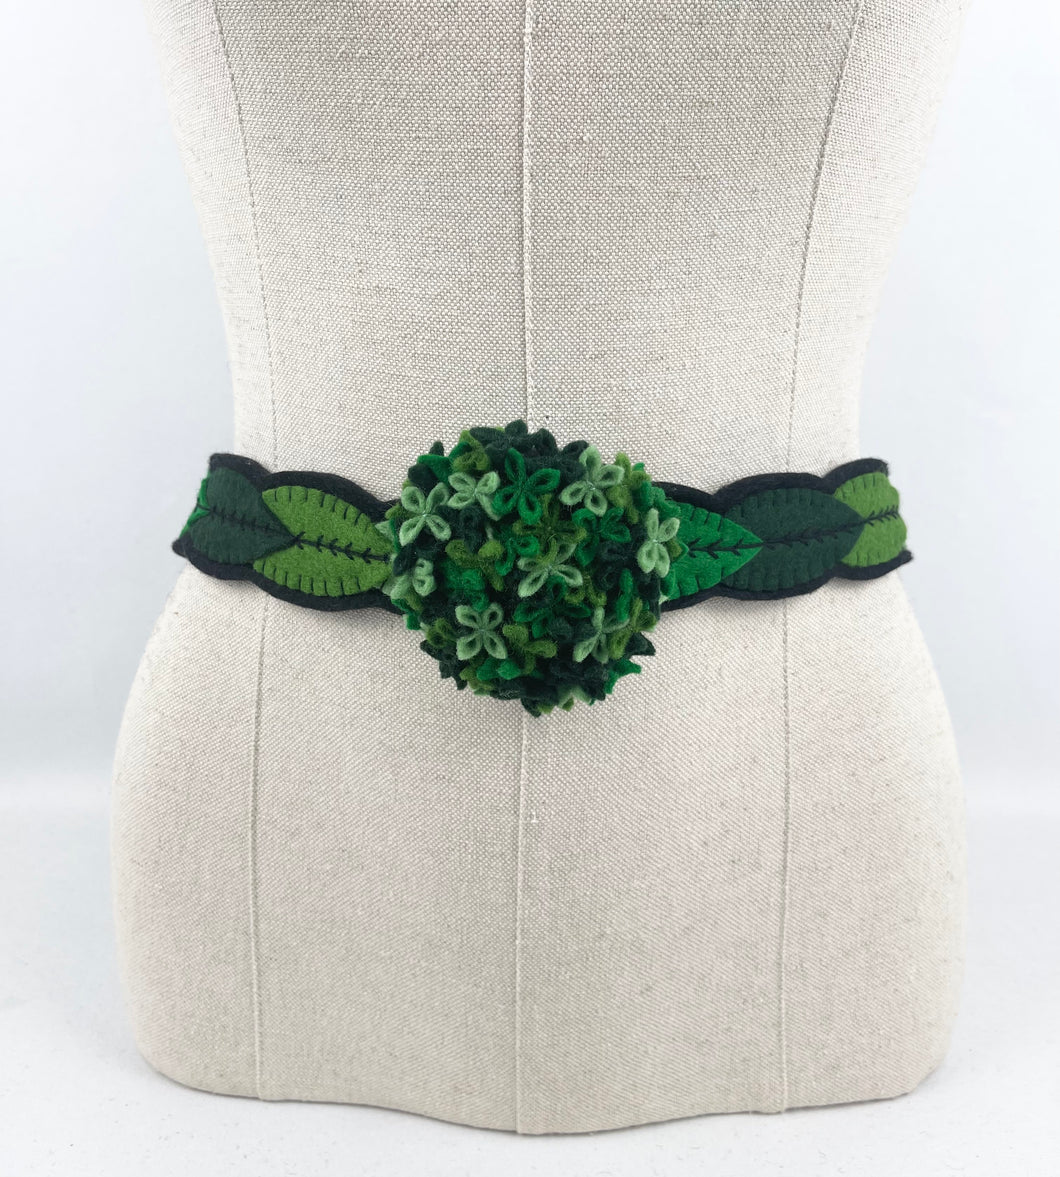 1940's Style Felt Belt in Emerald, Pistachio and Dark Green Made From a 1941 Pattern Using Pure Wool Felt - Waist 31